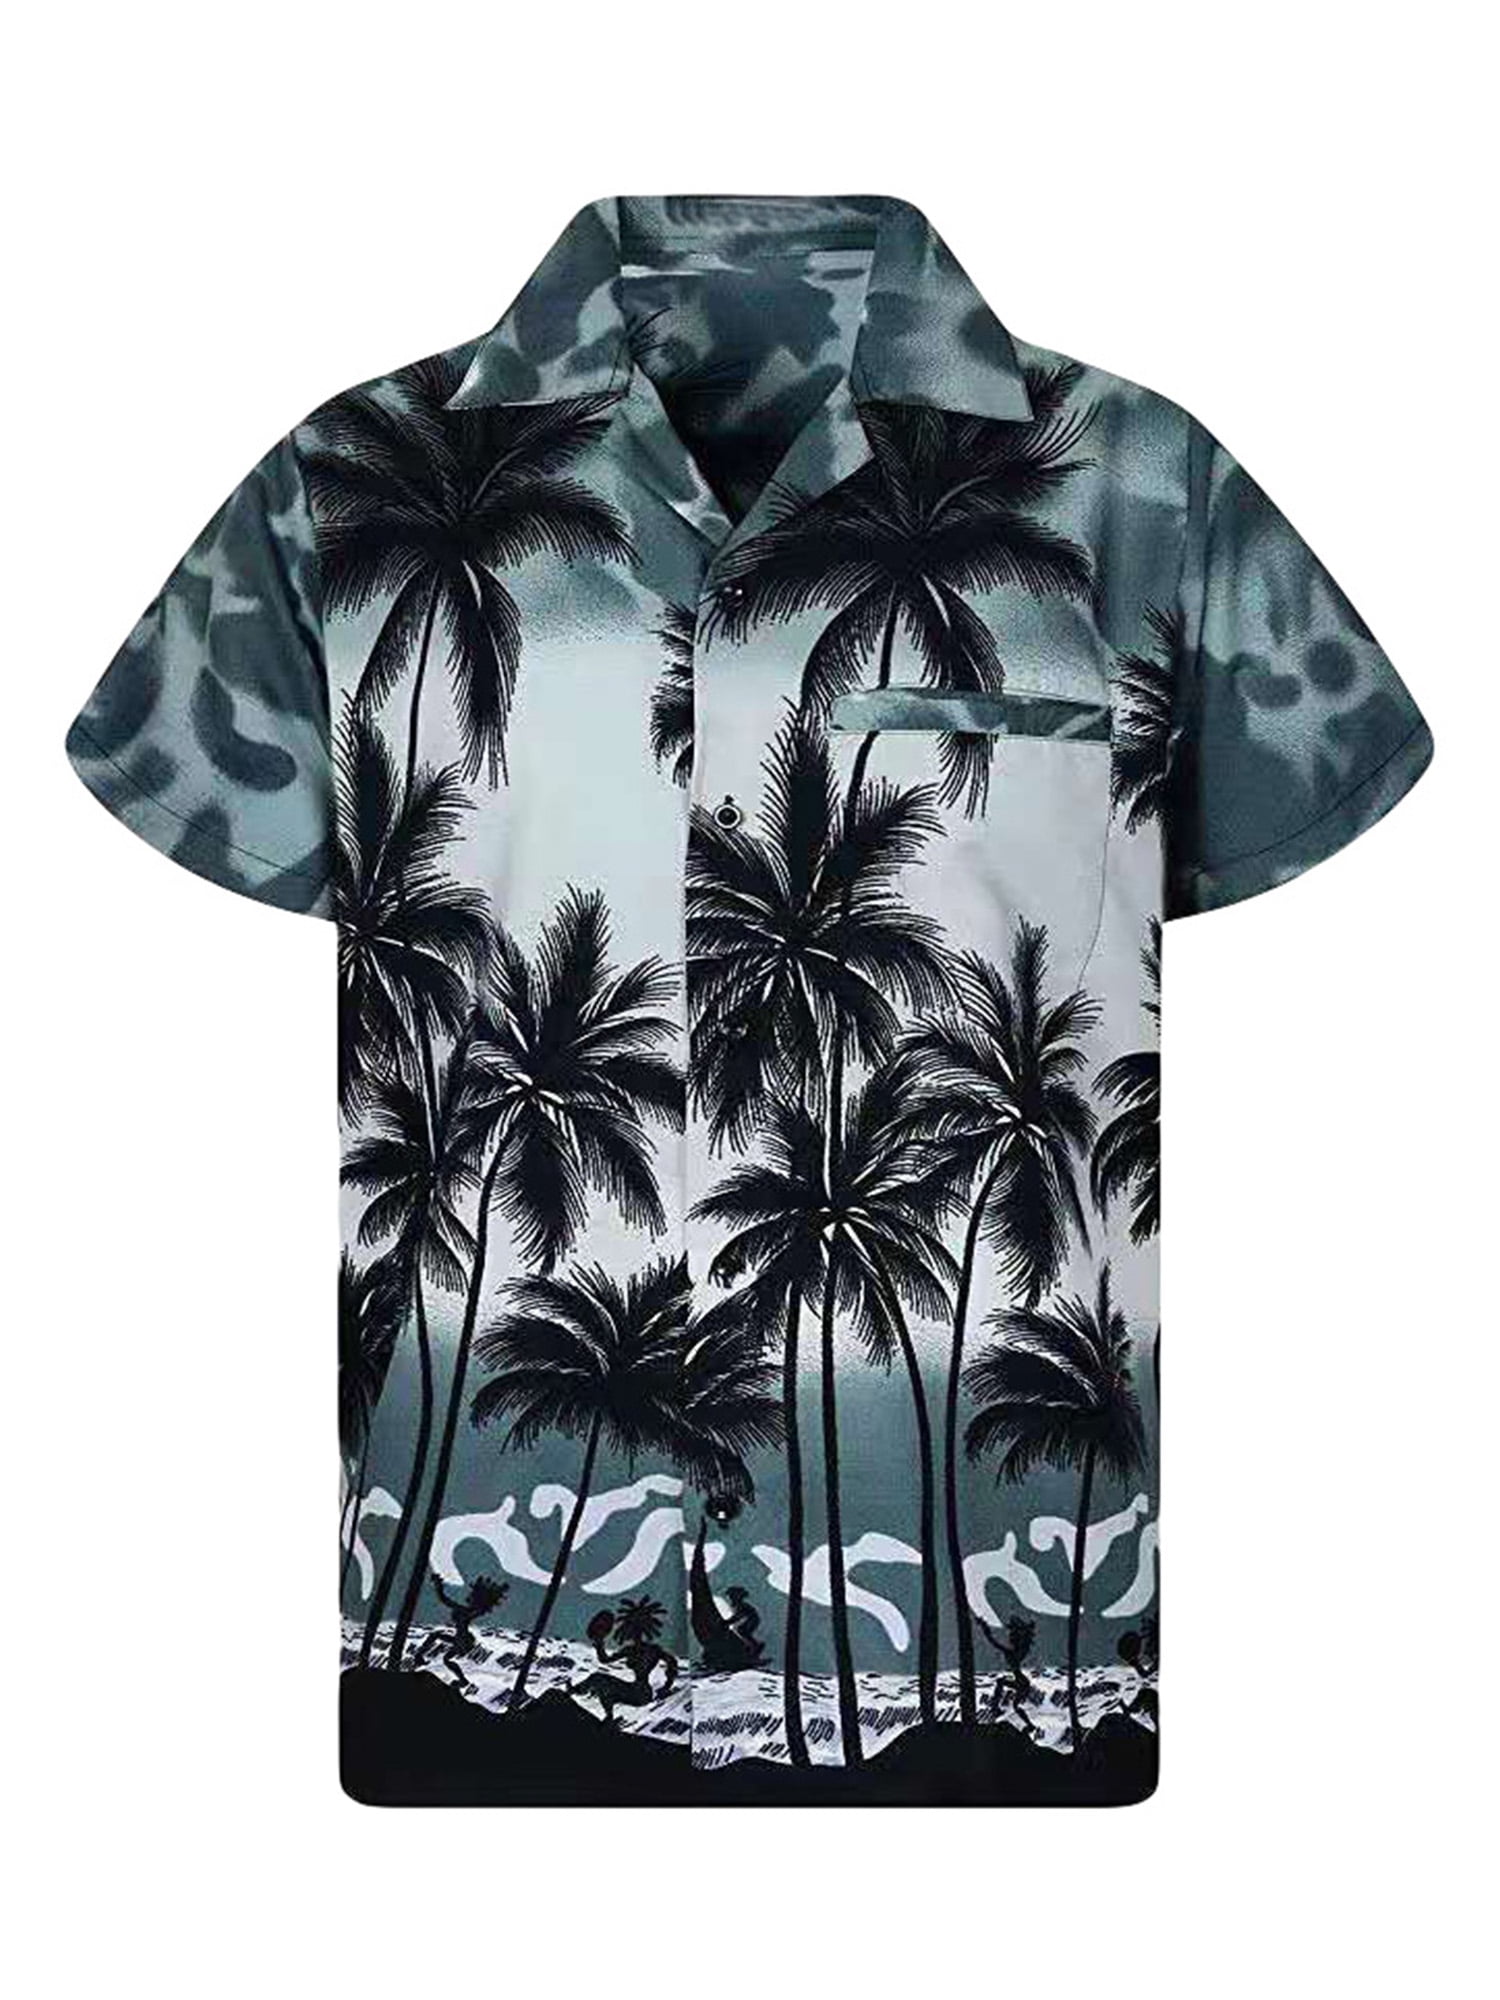 Pineapple Beach Ocean Palm Tree Unisex Toddler Baseball Jersey Contrast 3/4 Sleeves Tee 